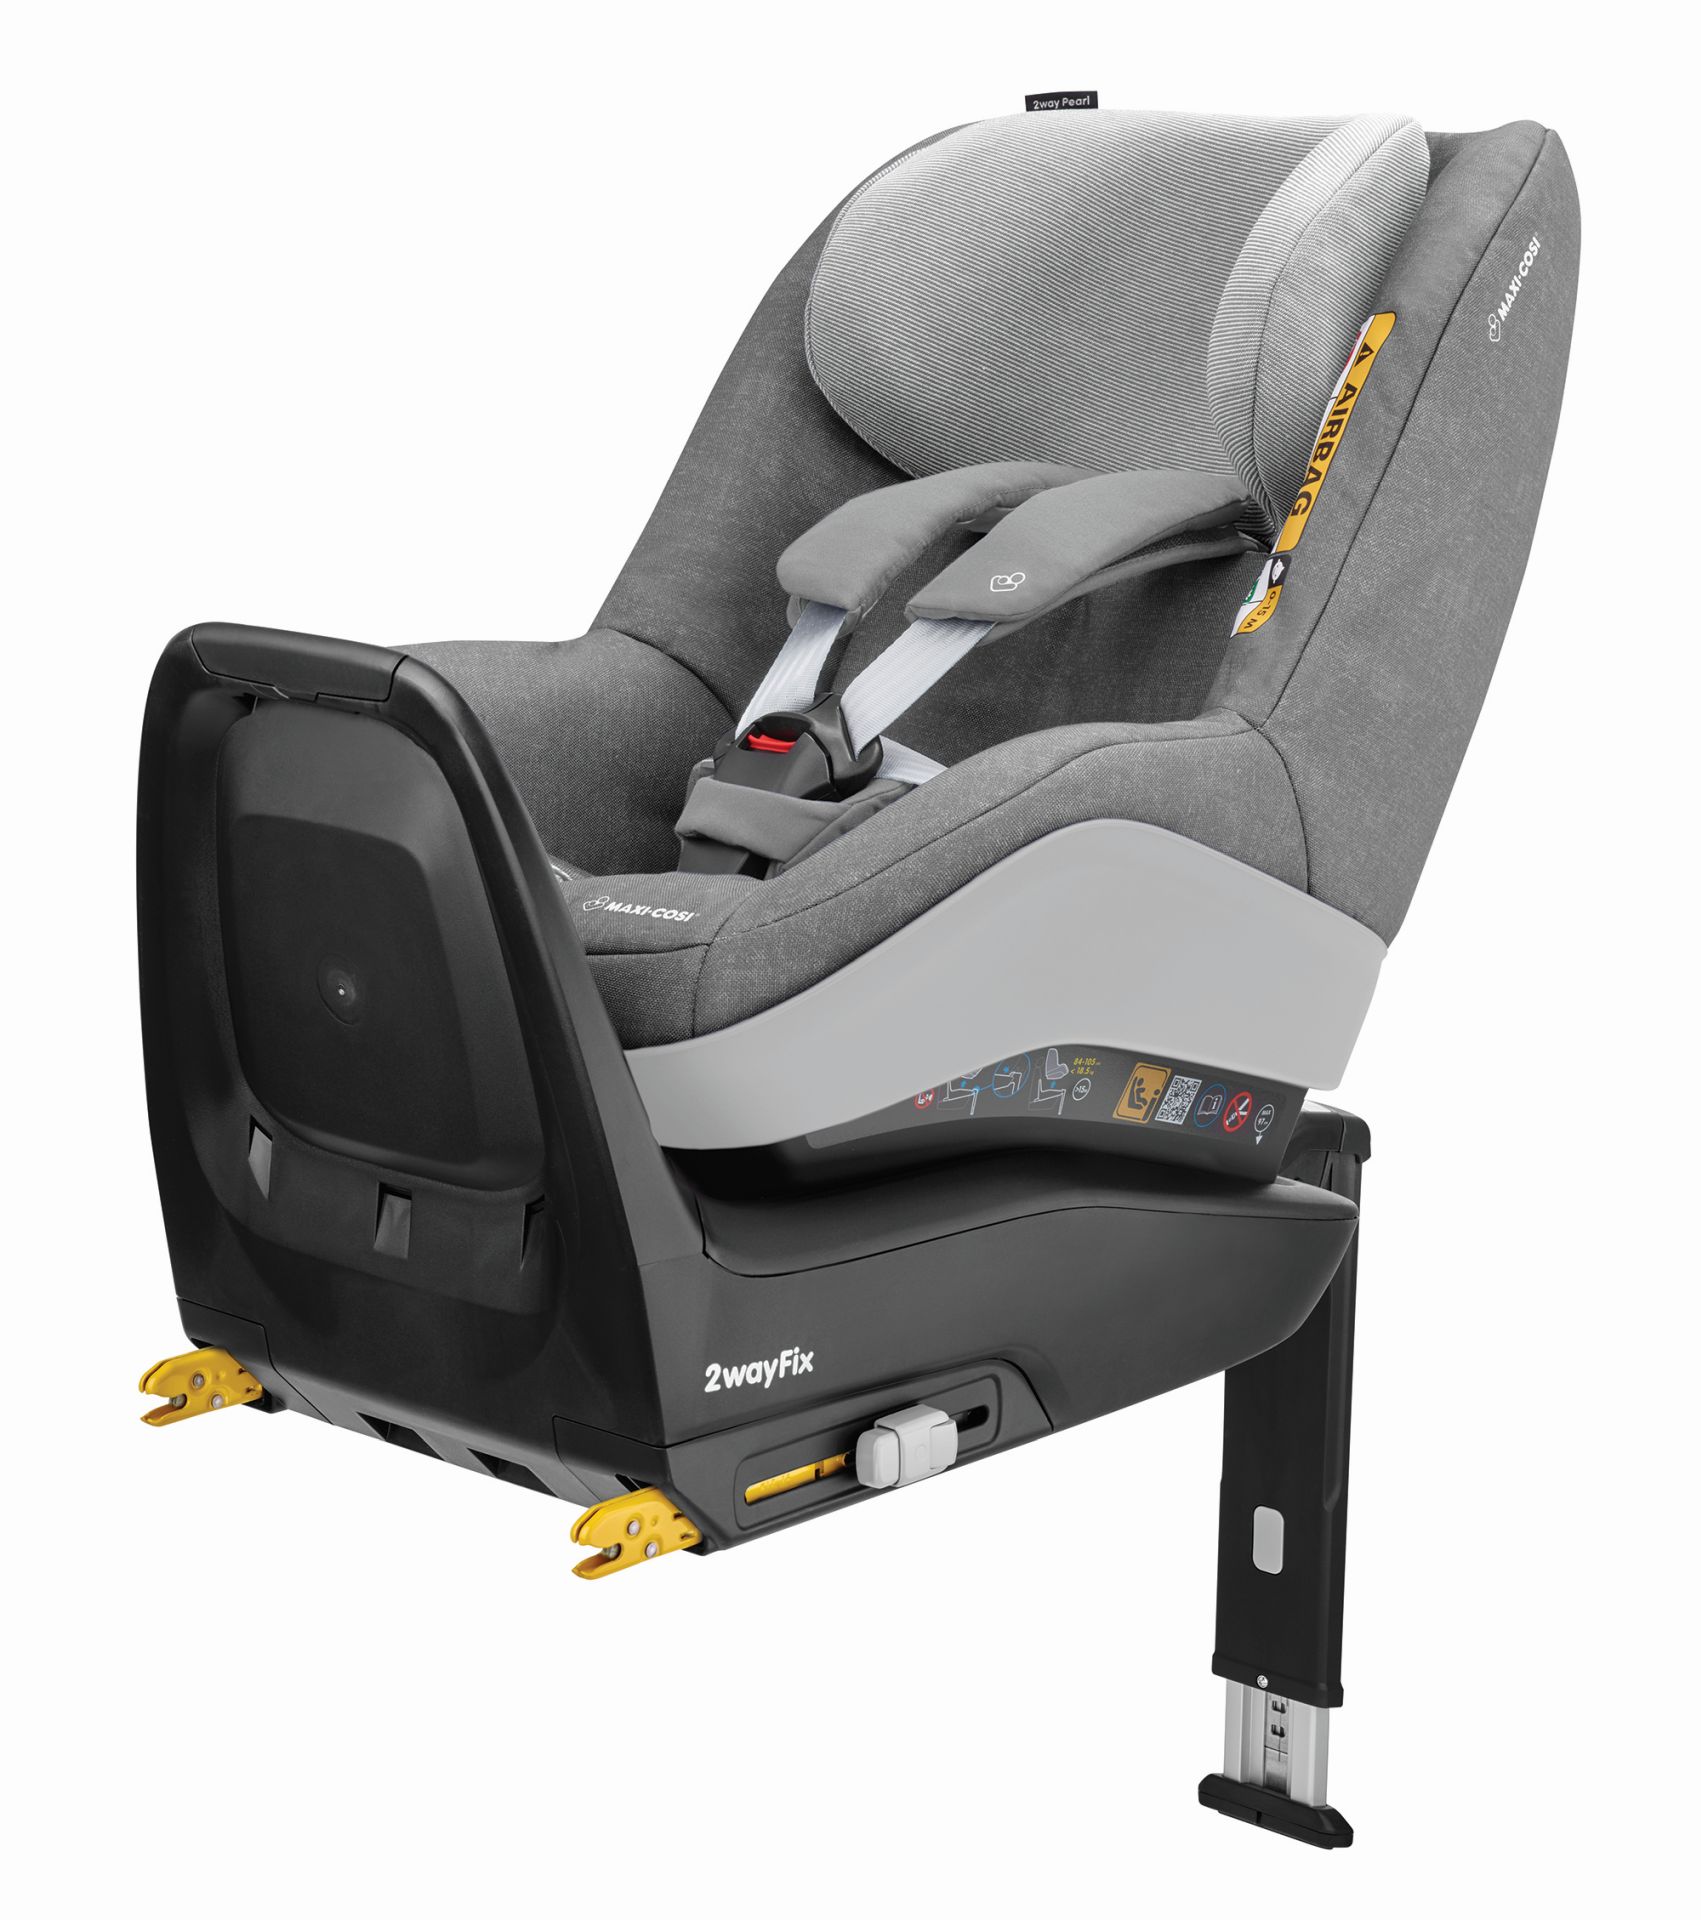 Bērnu autosēdeklis 9-18 kg MAXI-COSI Pearl Nomad Grey